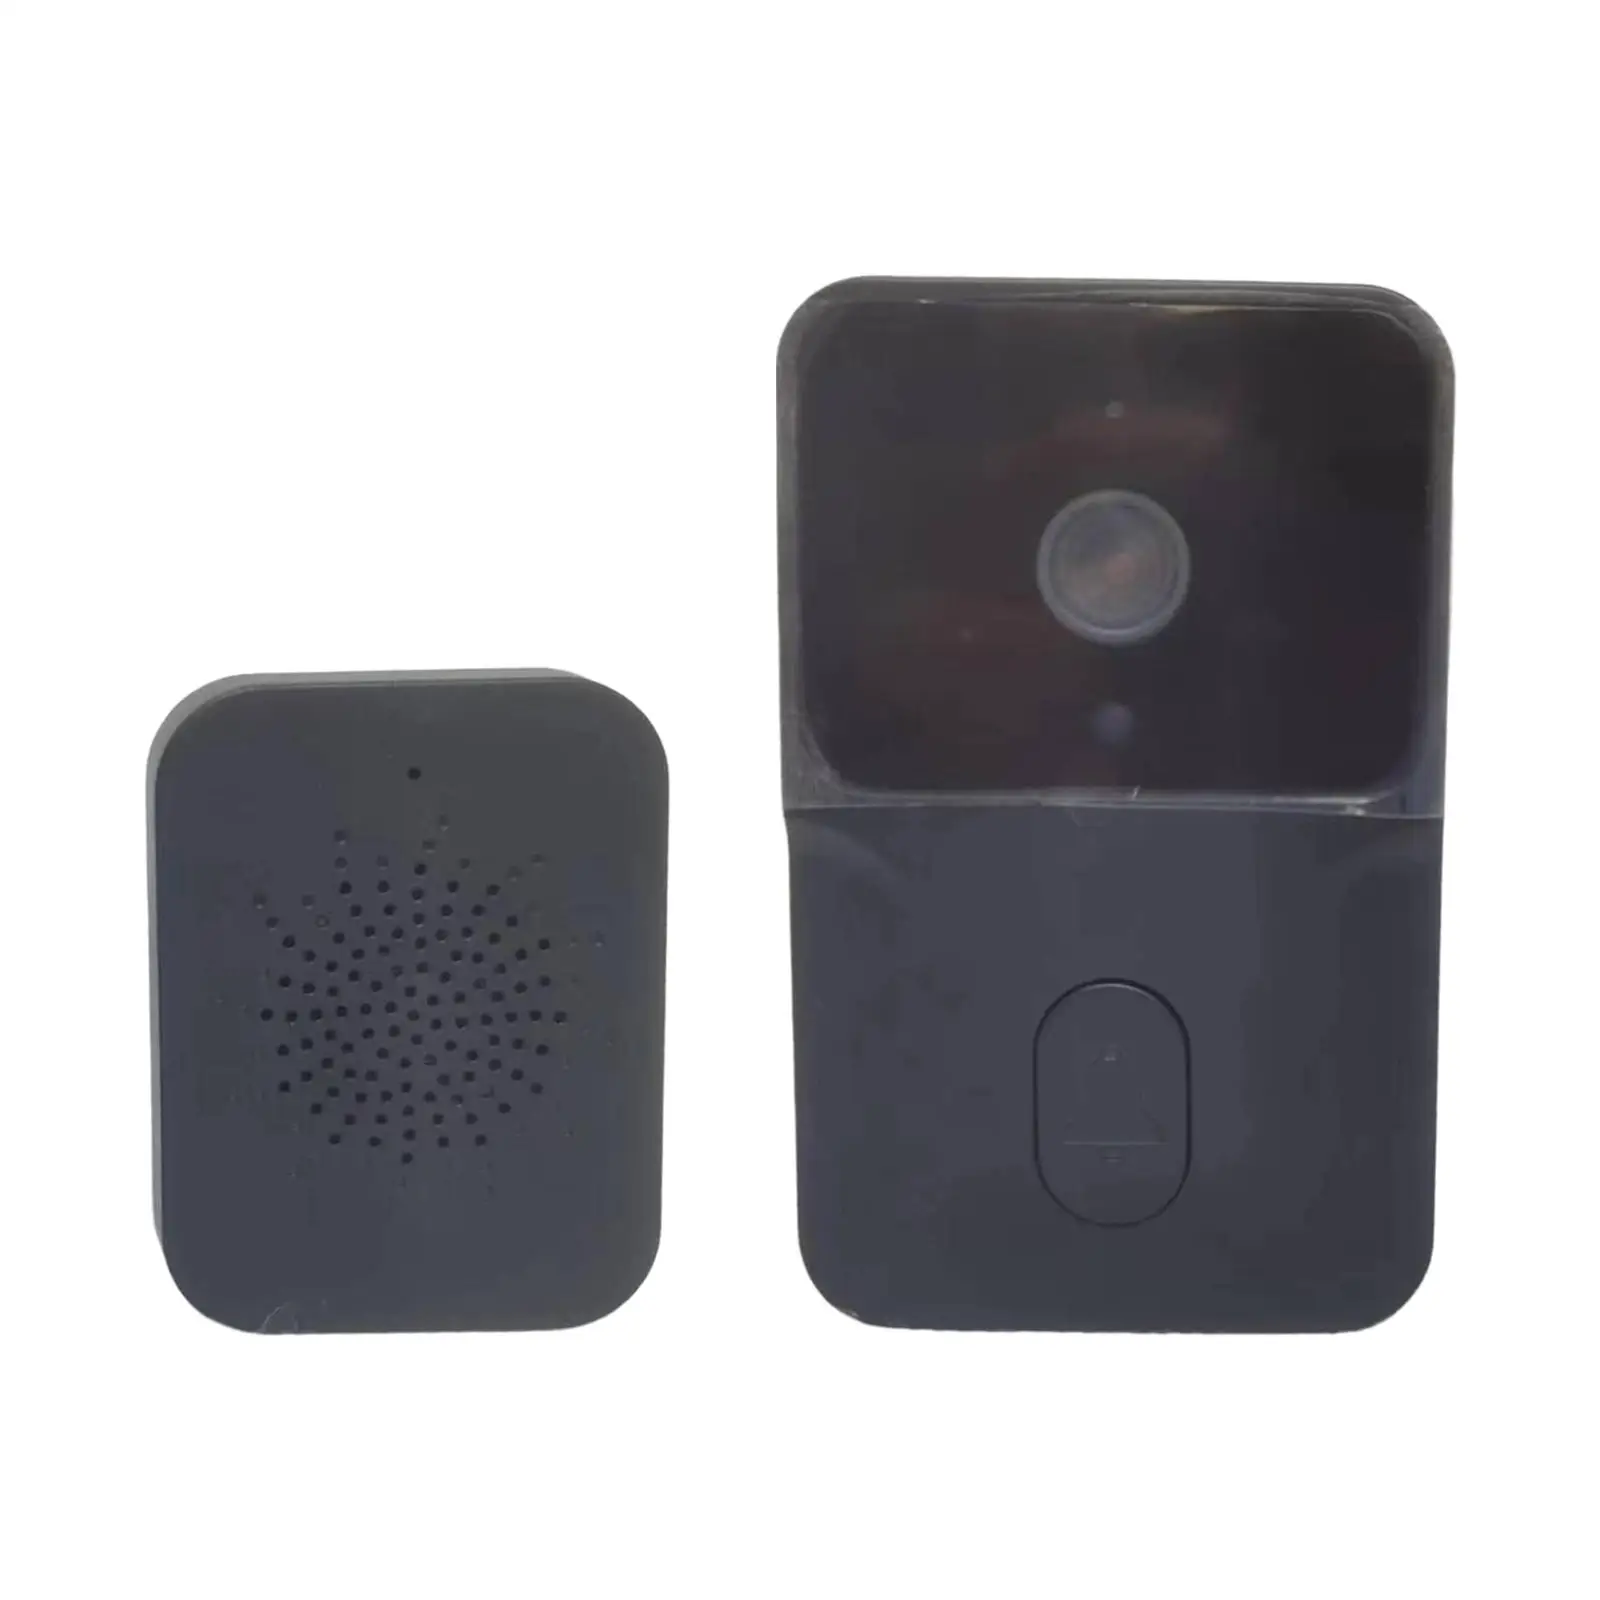 Doorbell Camera Wireless WiFi Video Doorbell Camera for Apartments Classroom